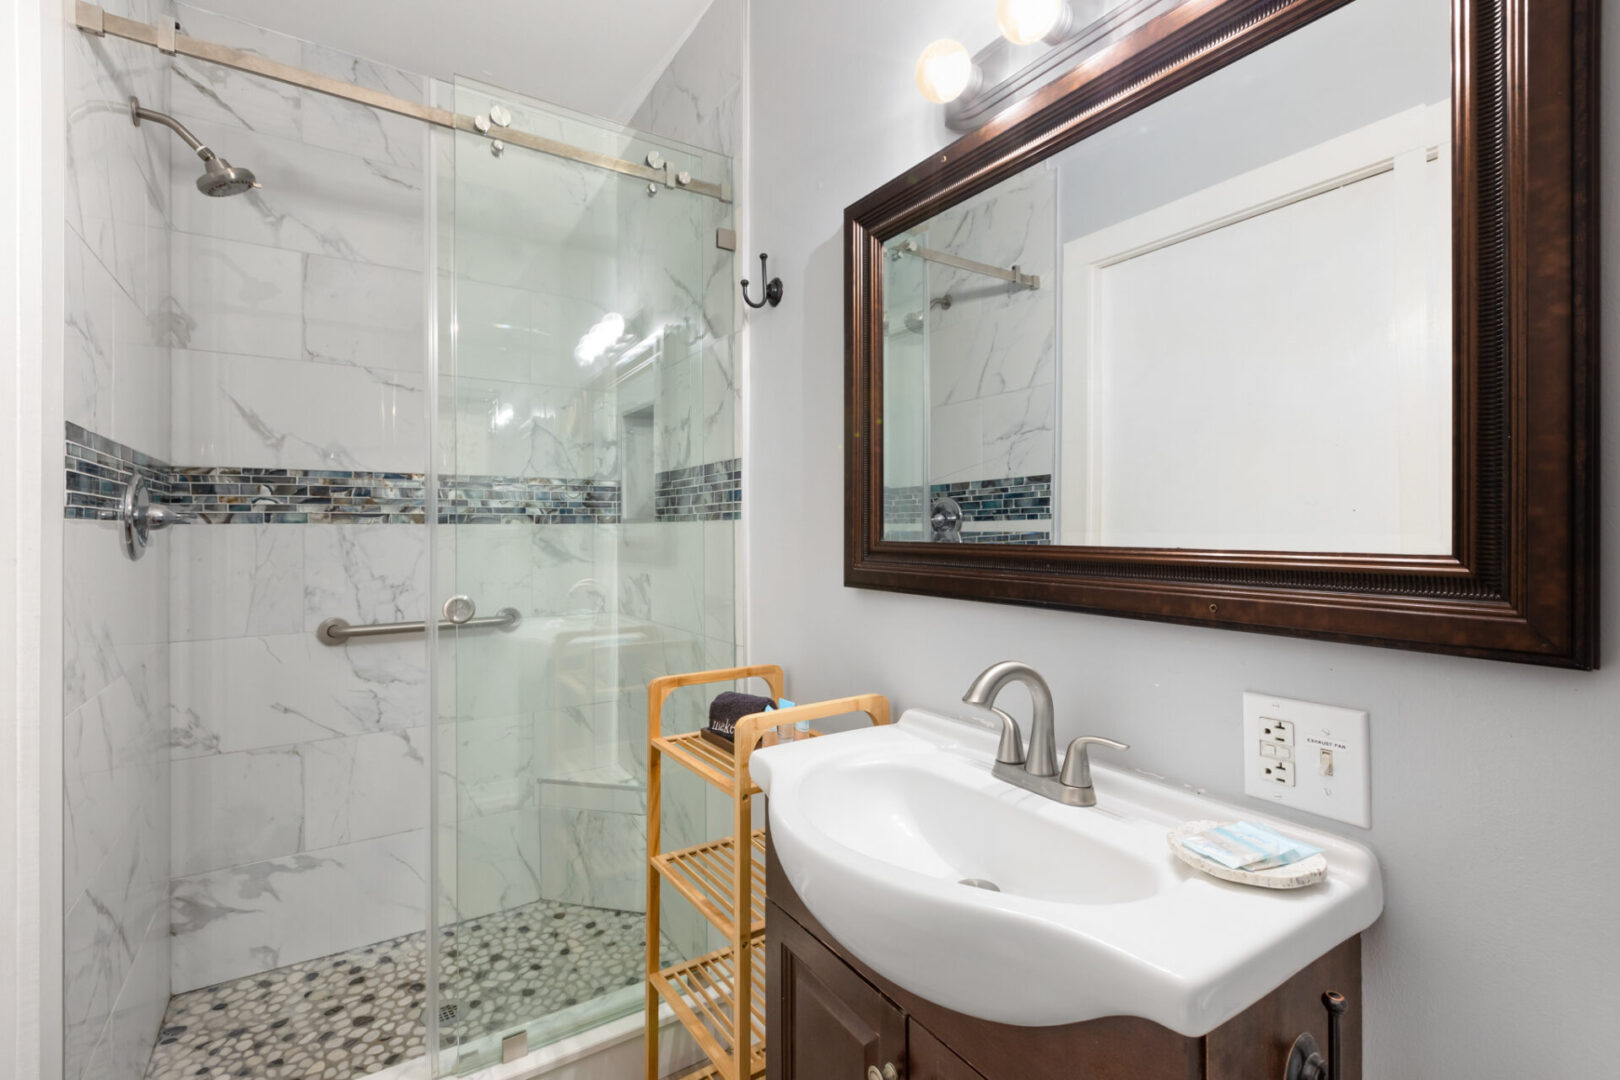 A bathroom with a mirror and a wash basin